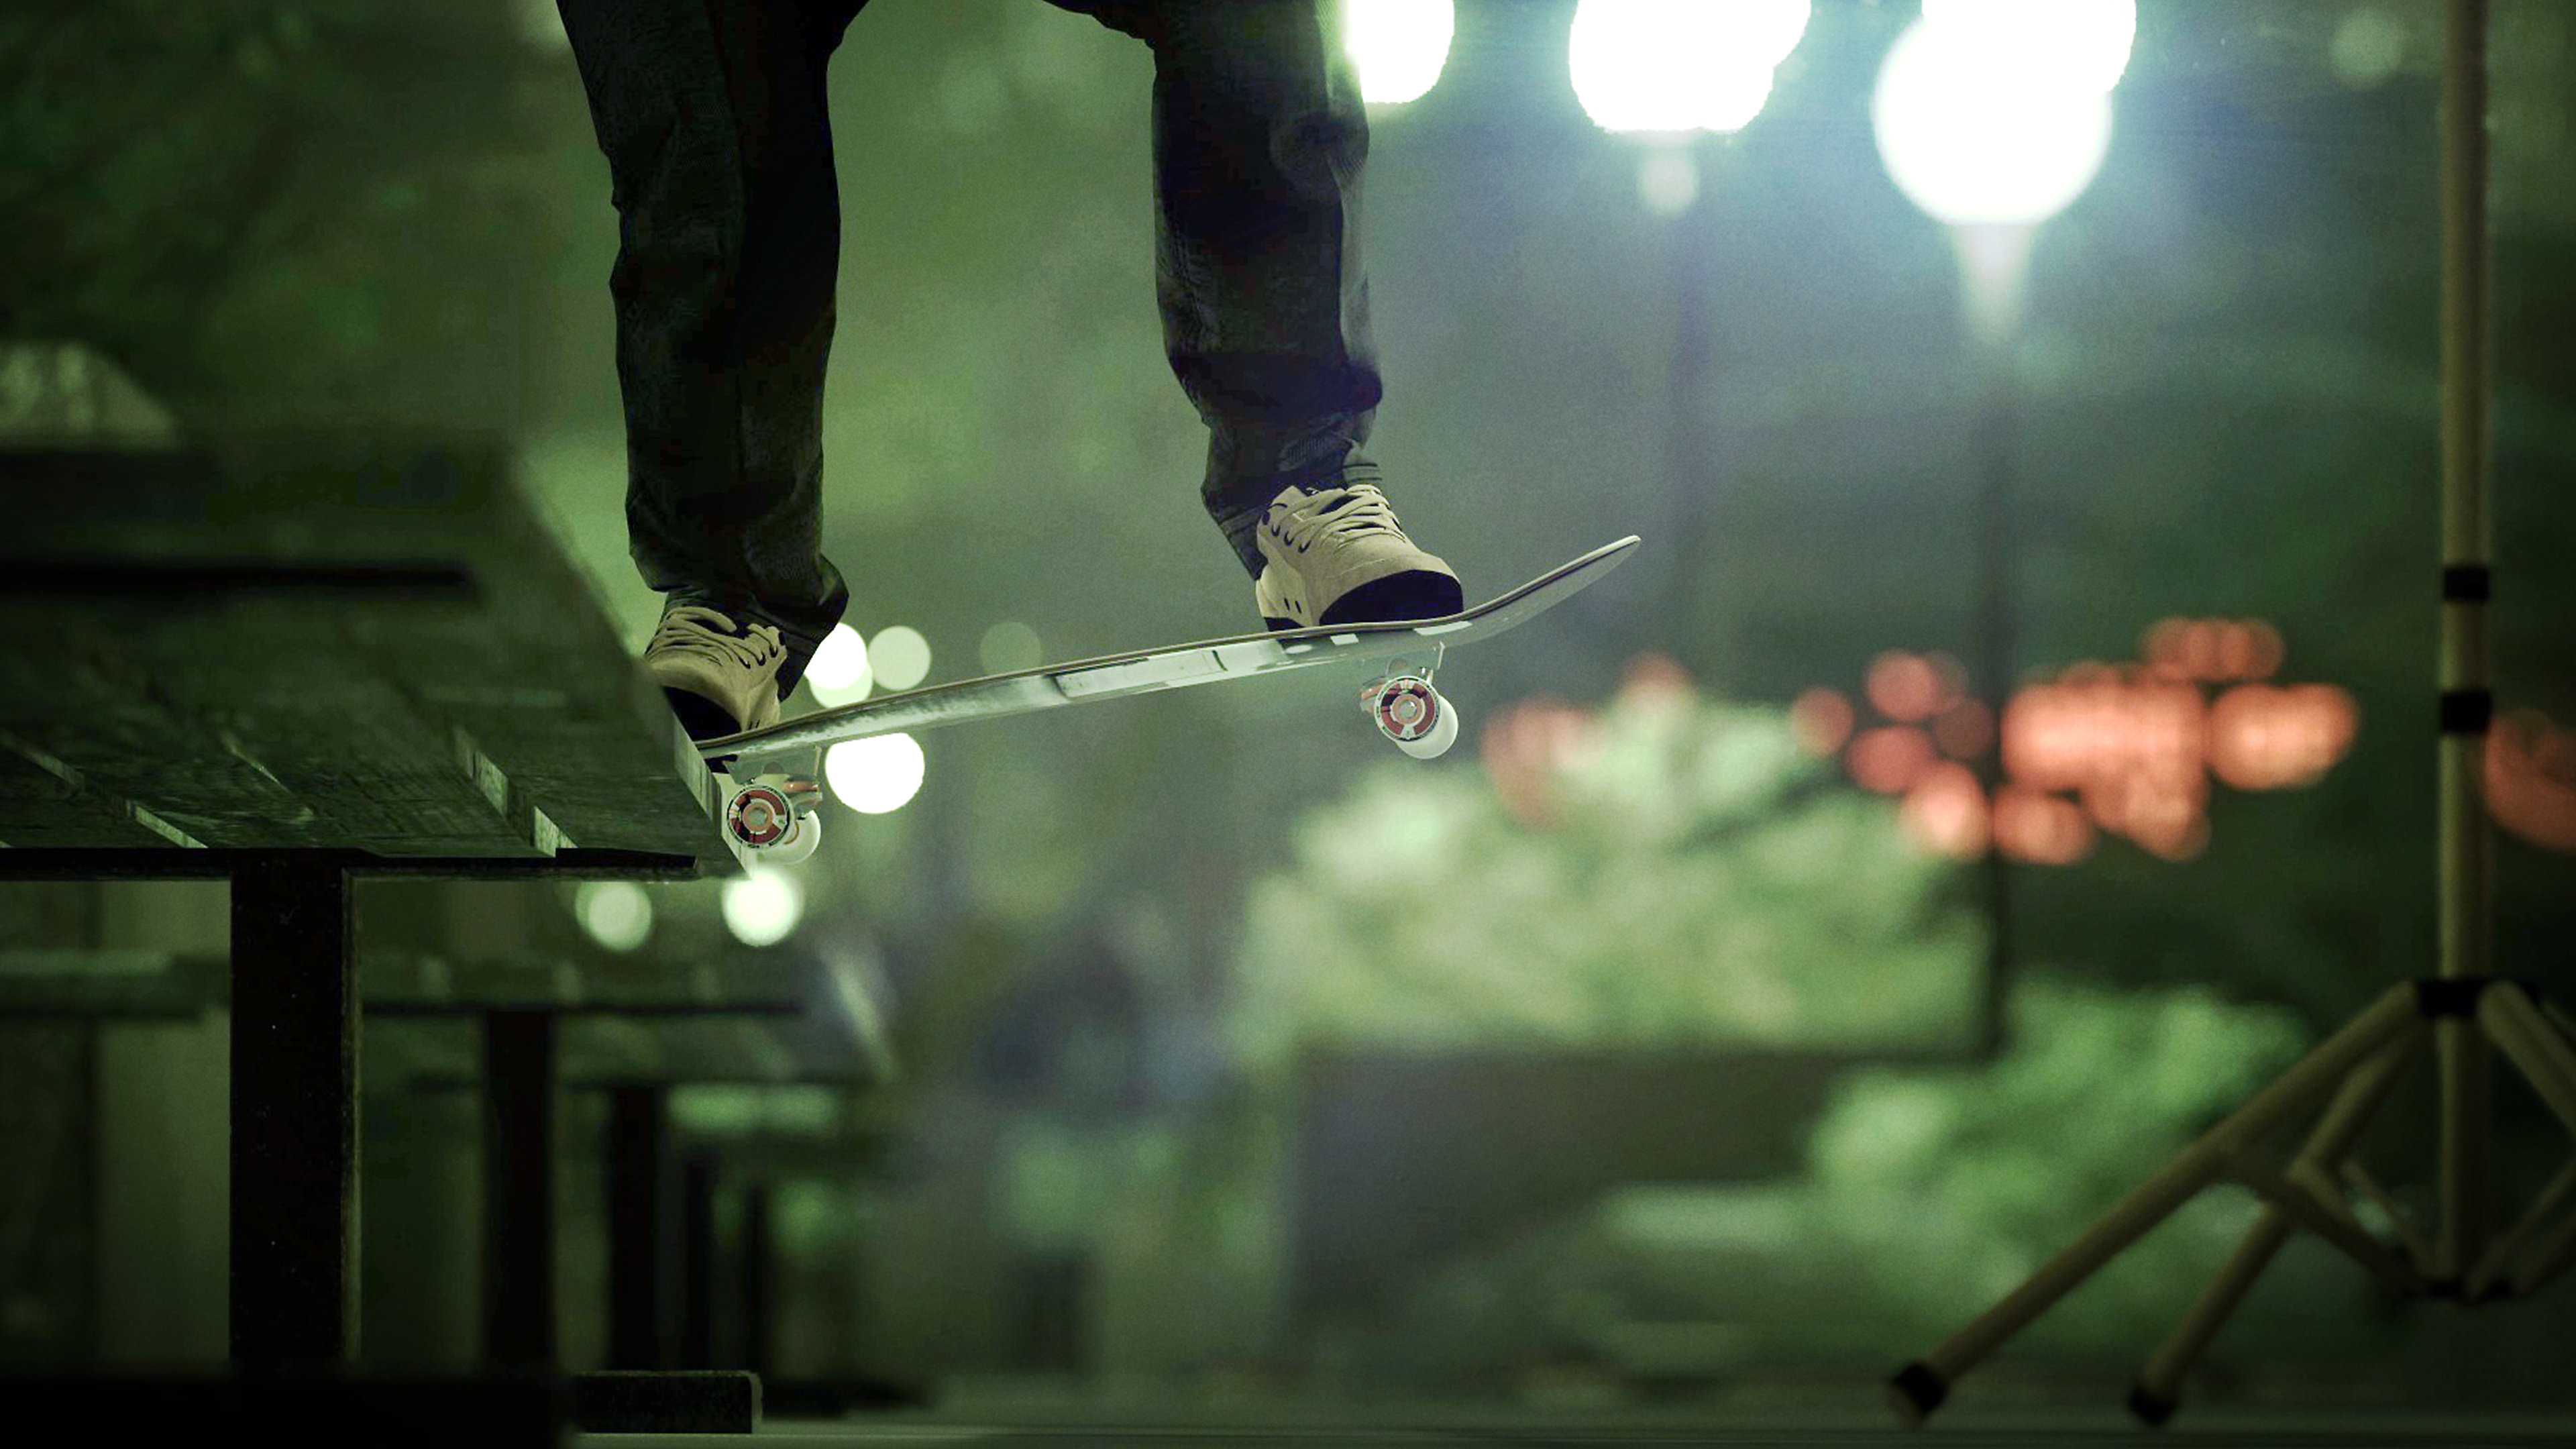 Session: Skate Sim screenshot showing a skater grinding a bench